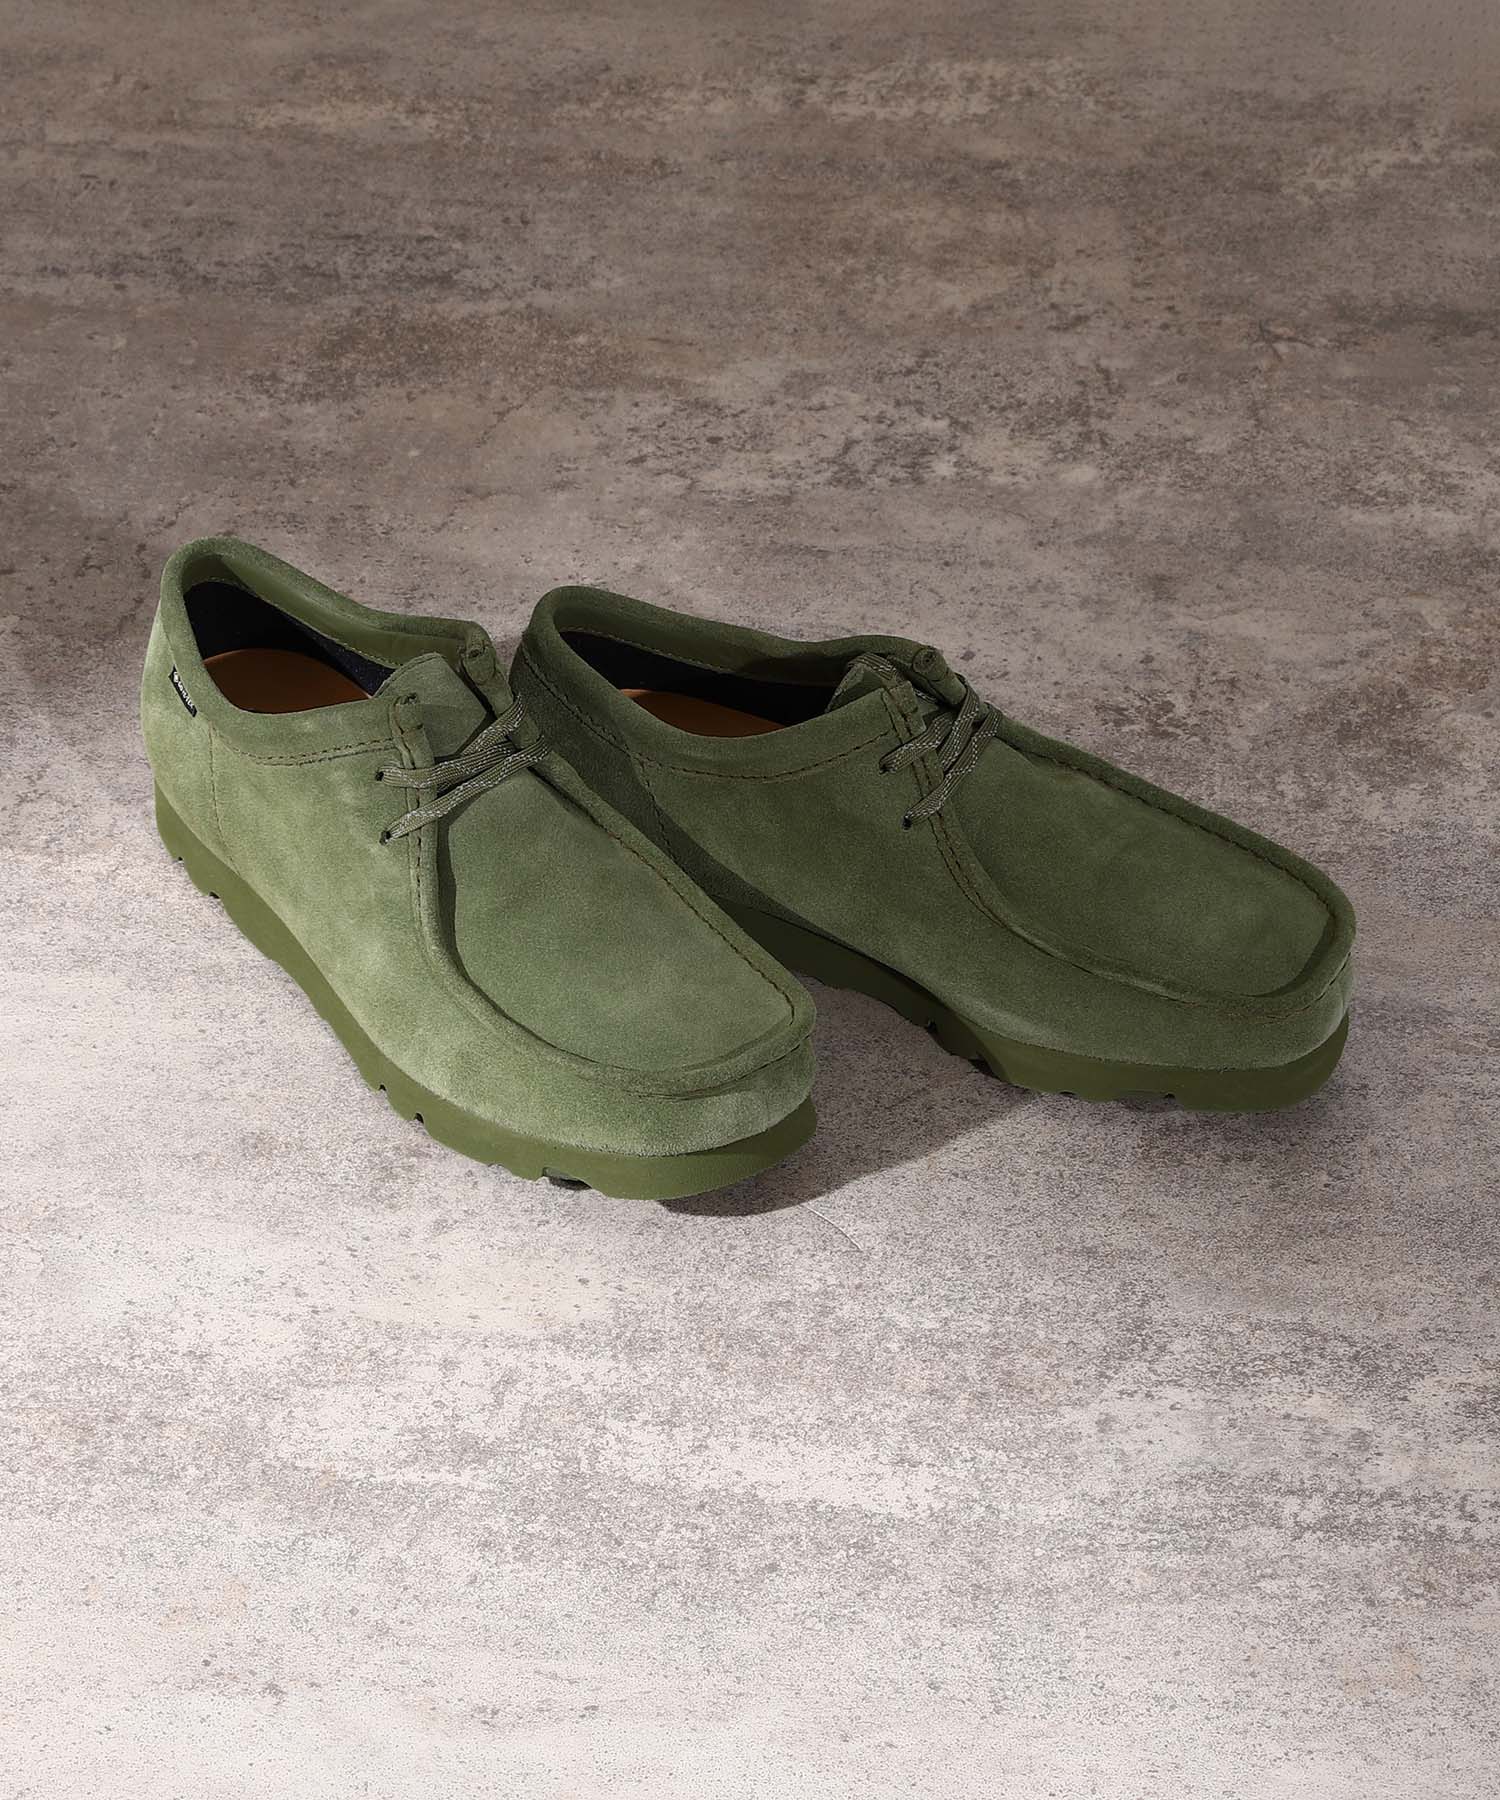 Clarks WallabeeGTX Loden Green - (26174044)国内正規品 メンズ シューズ ブーツ モカシン フットウェア 靴 ストリート カジュアル シンプル 定番アイテム オールシーズン 防水 撥水 高機能 グリーン